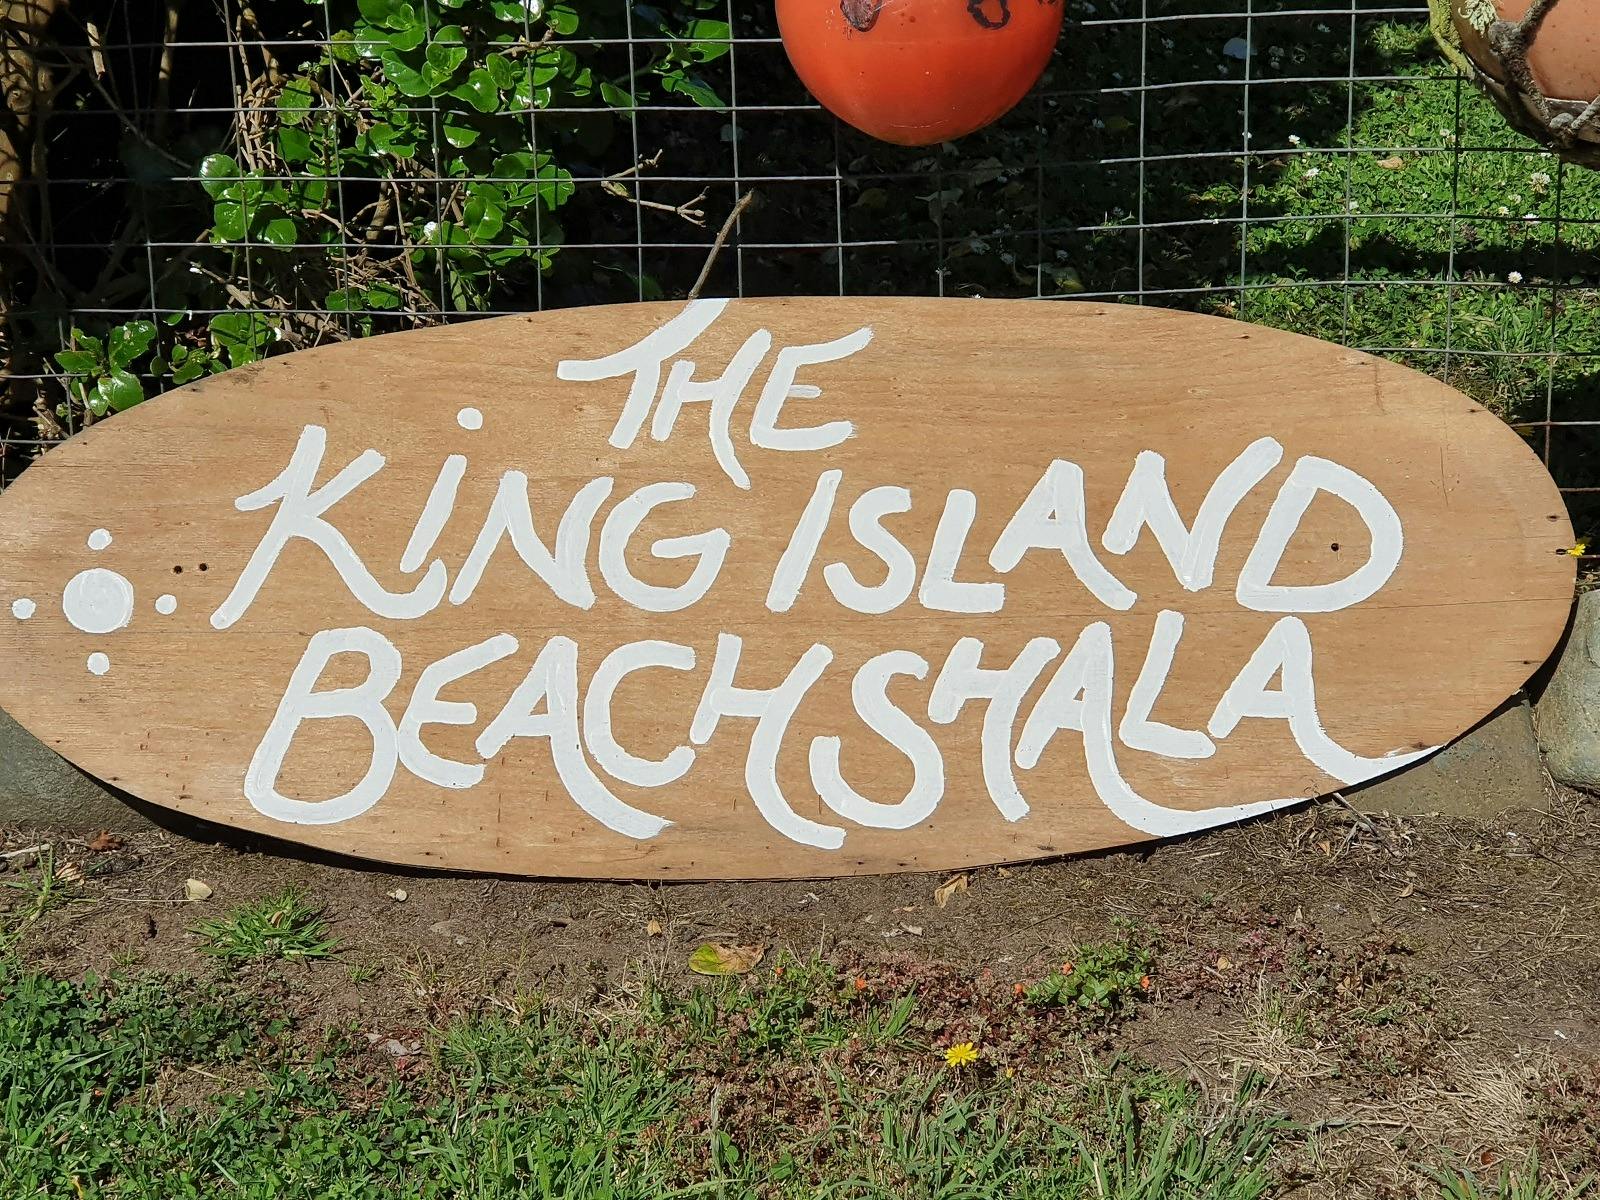 The King Island Beach Shala